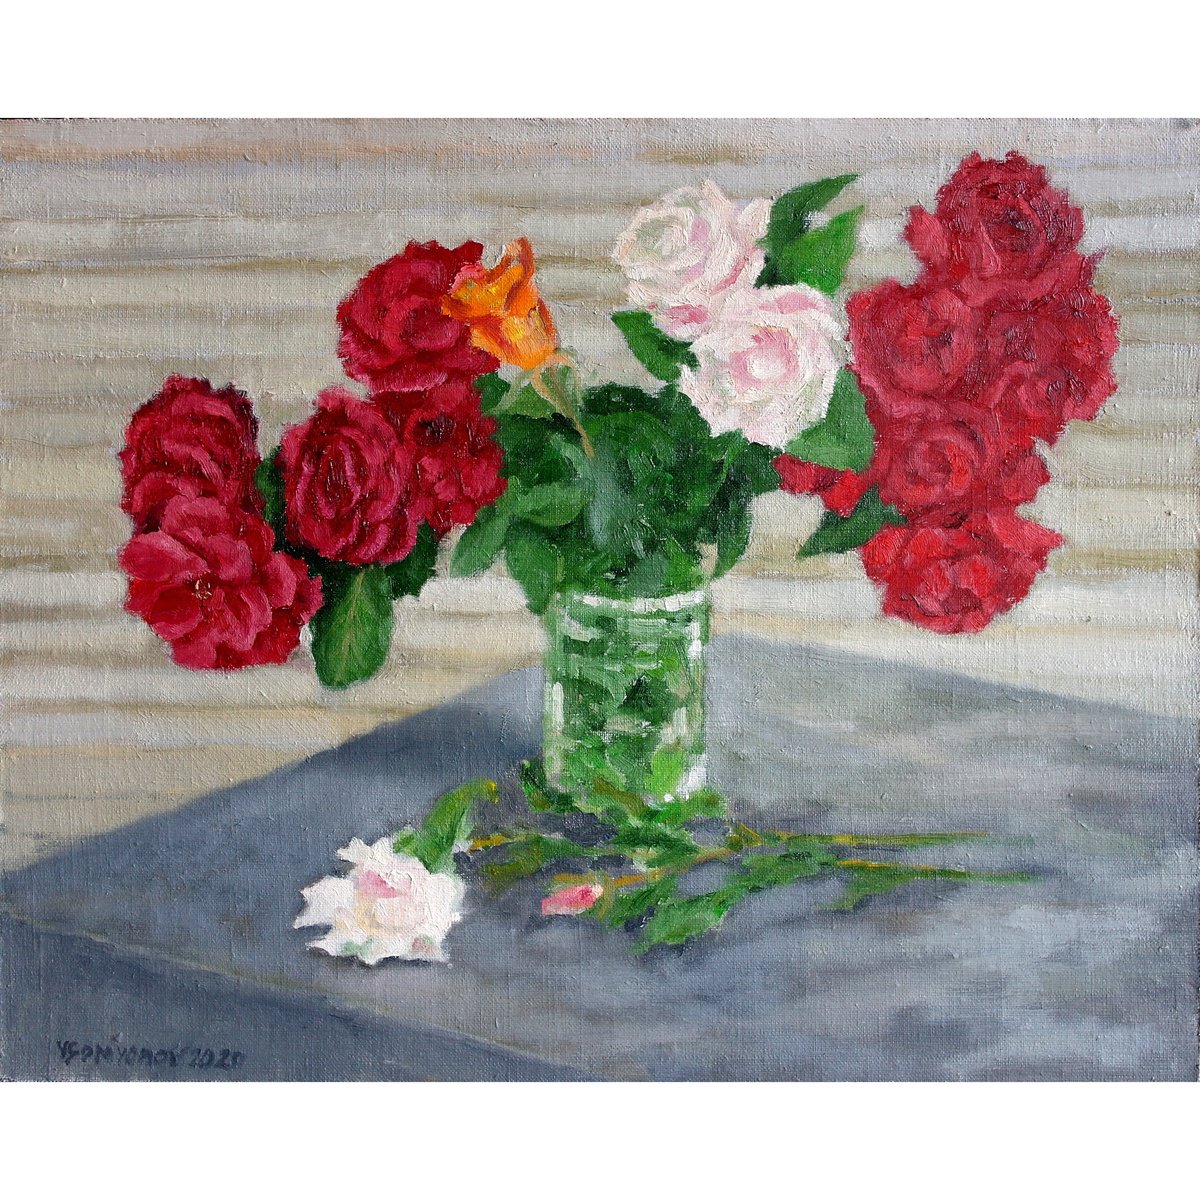 Mixed Garden Roses in a Vase by Juri Semjonov